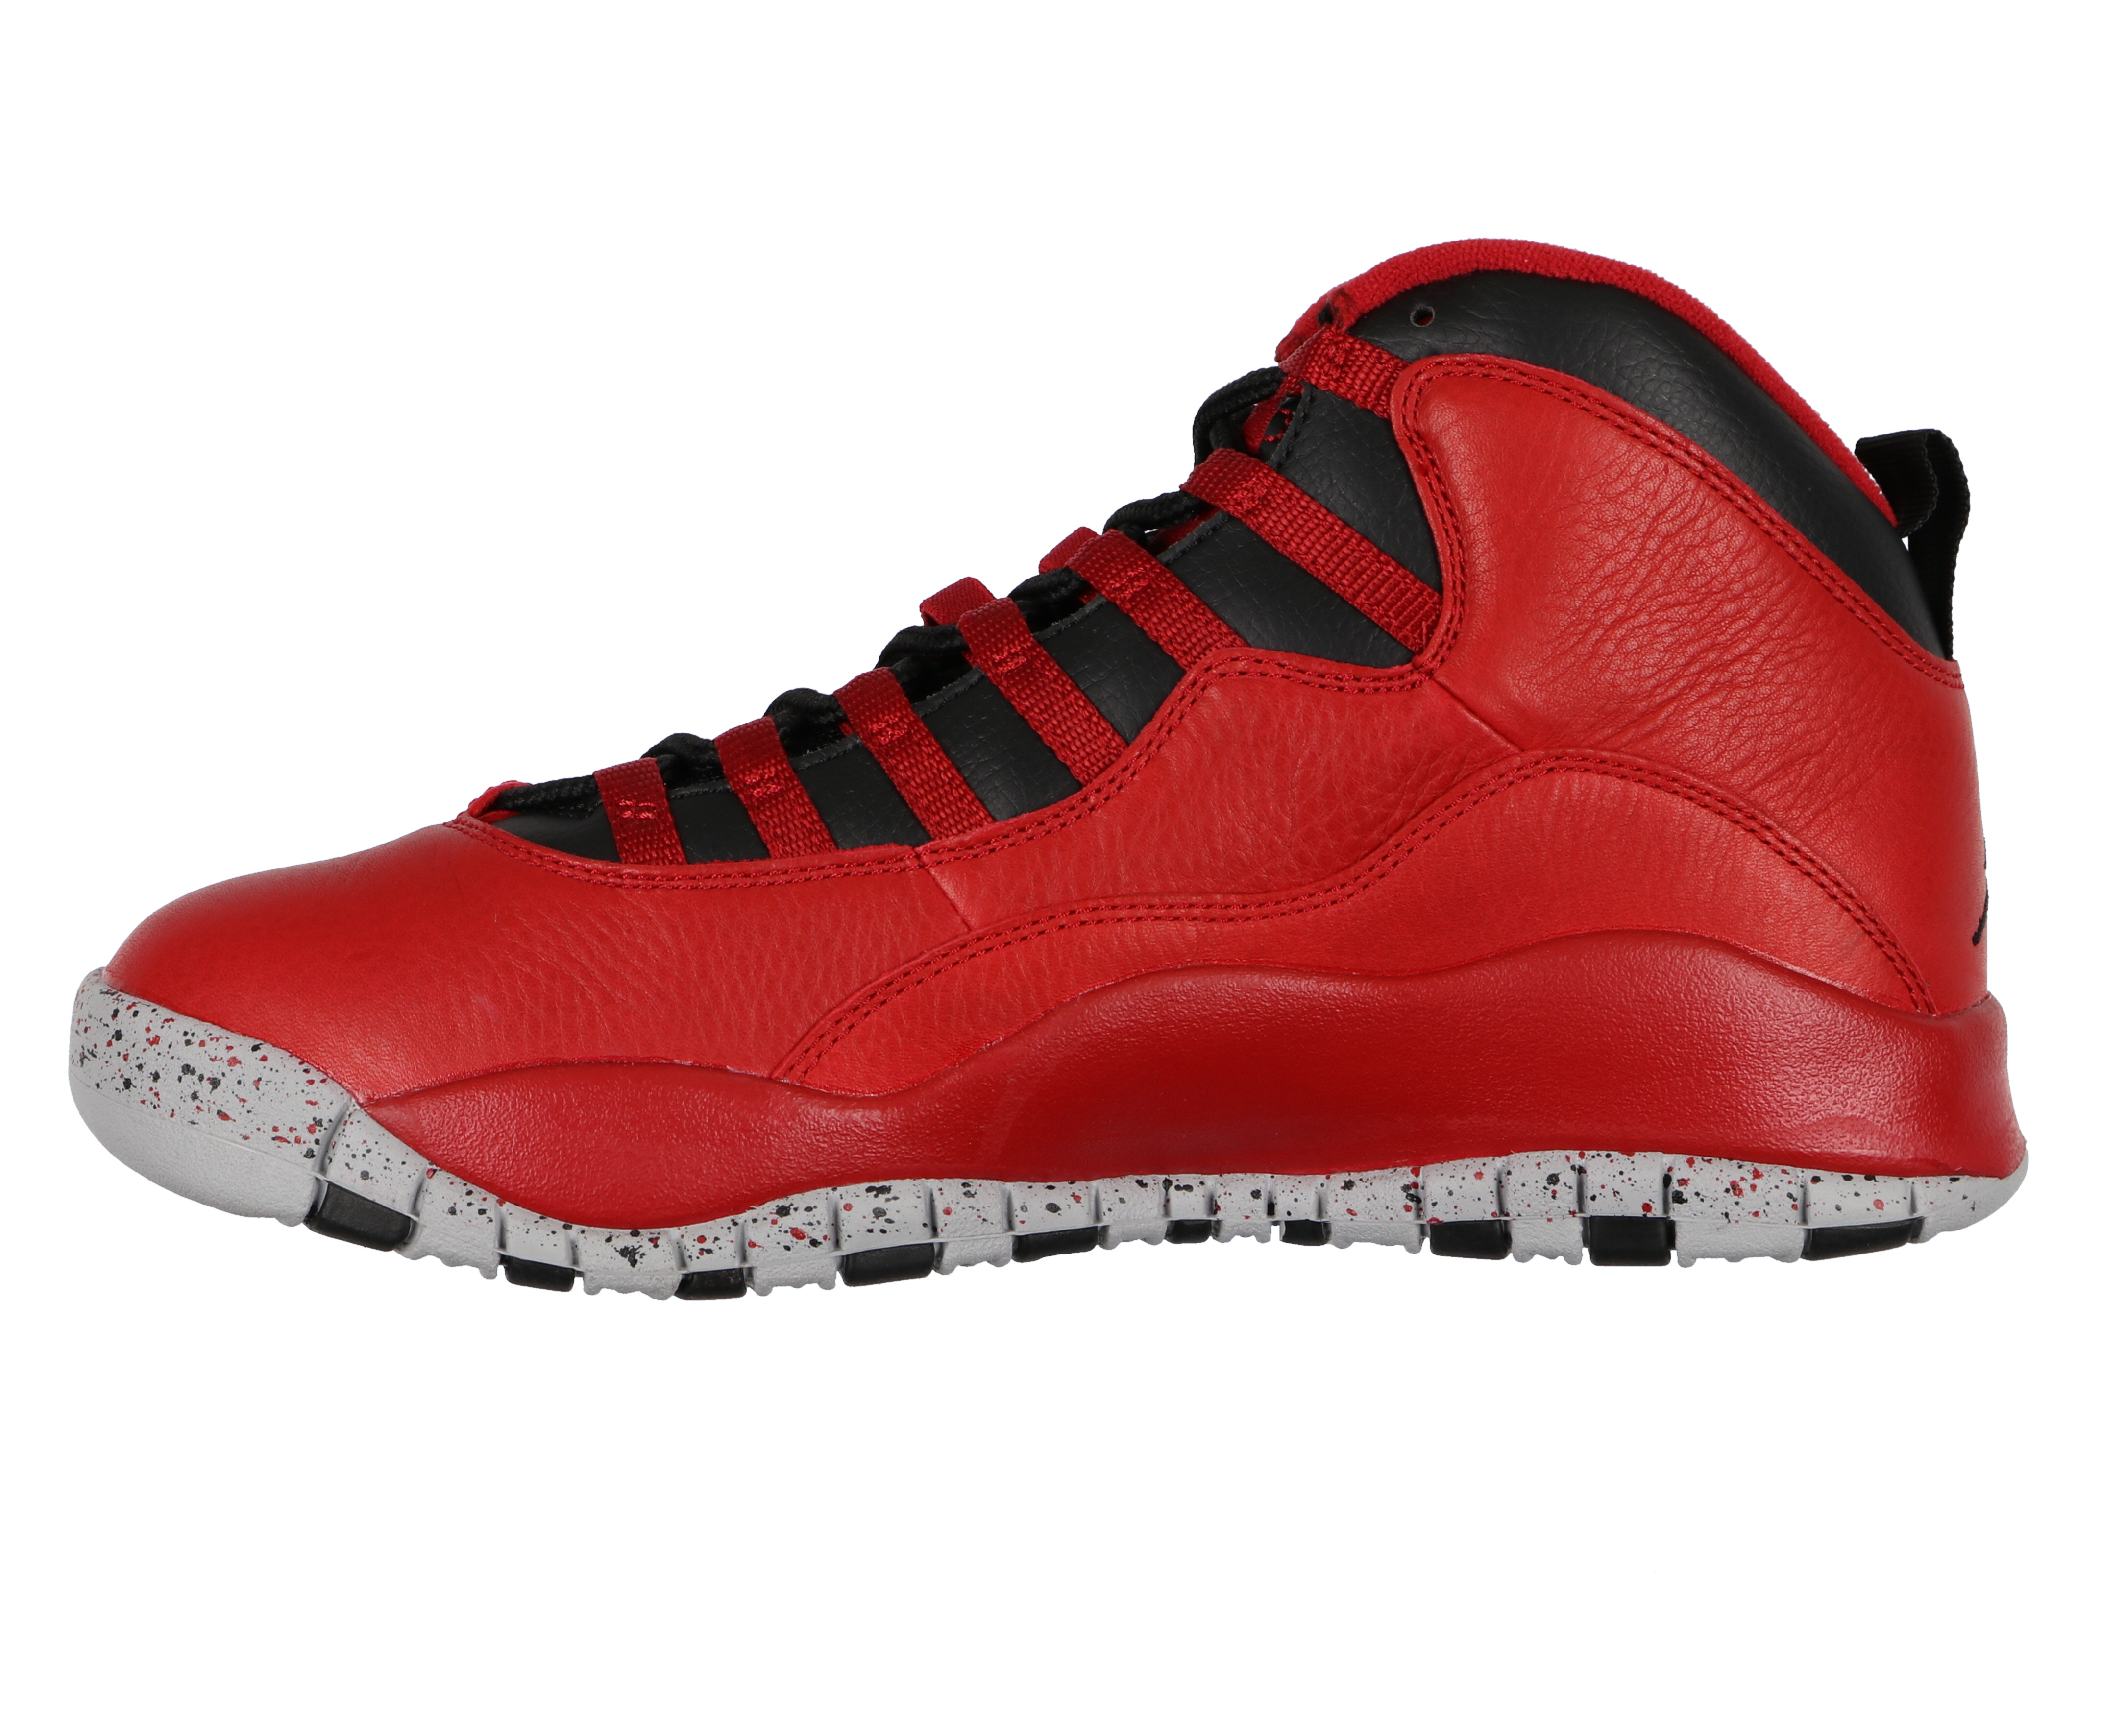 Jordan Men's Retro 10 30th Basketball Shoes sz 9.5 Red Black Bulls Over Broadway Edition - image 3 of 7